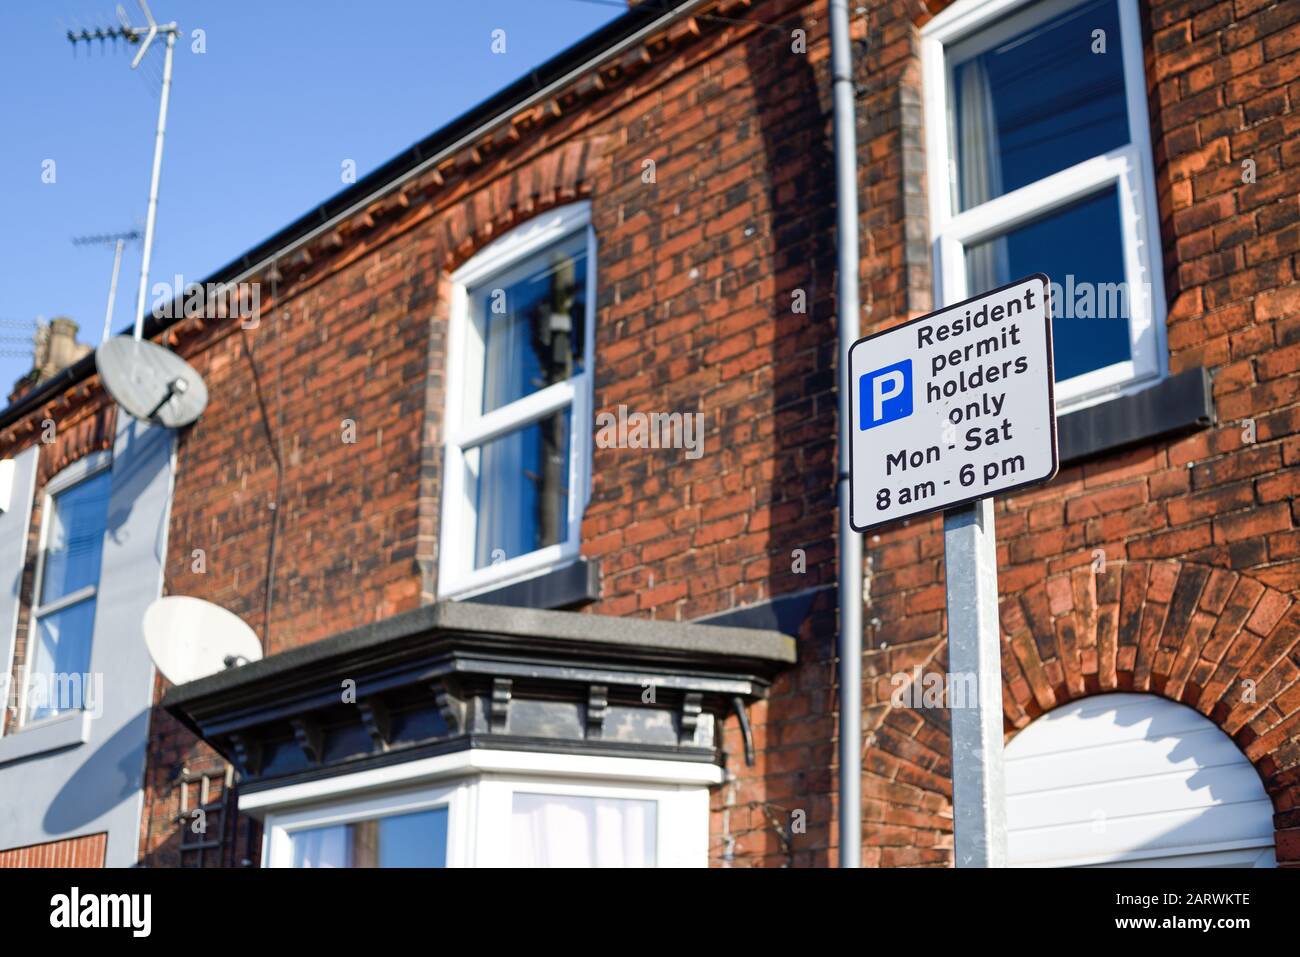 Resident Permit Parking Only Monday-Saturday Regulations.Retford Nottinghamshire, UK. Stock Photo